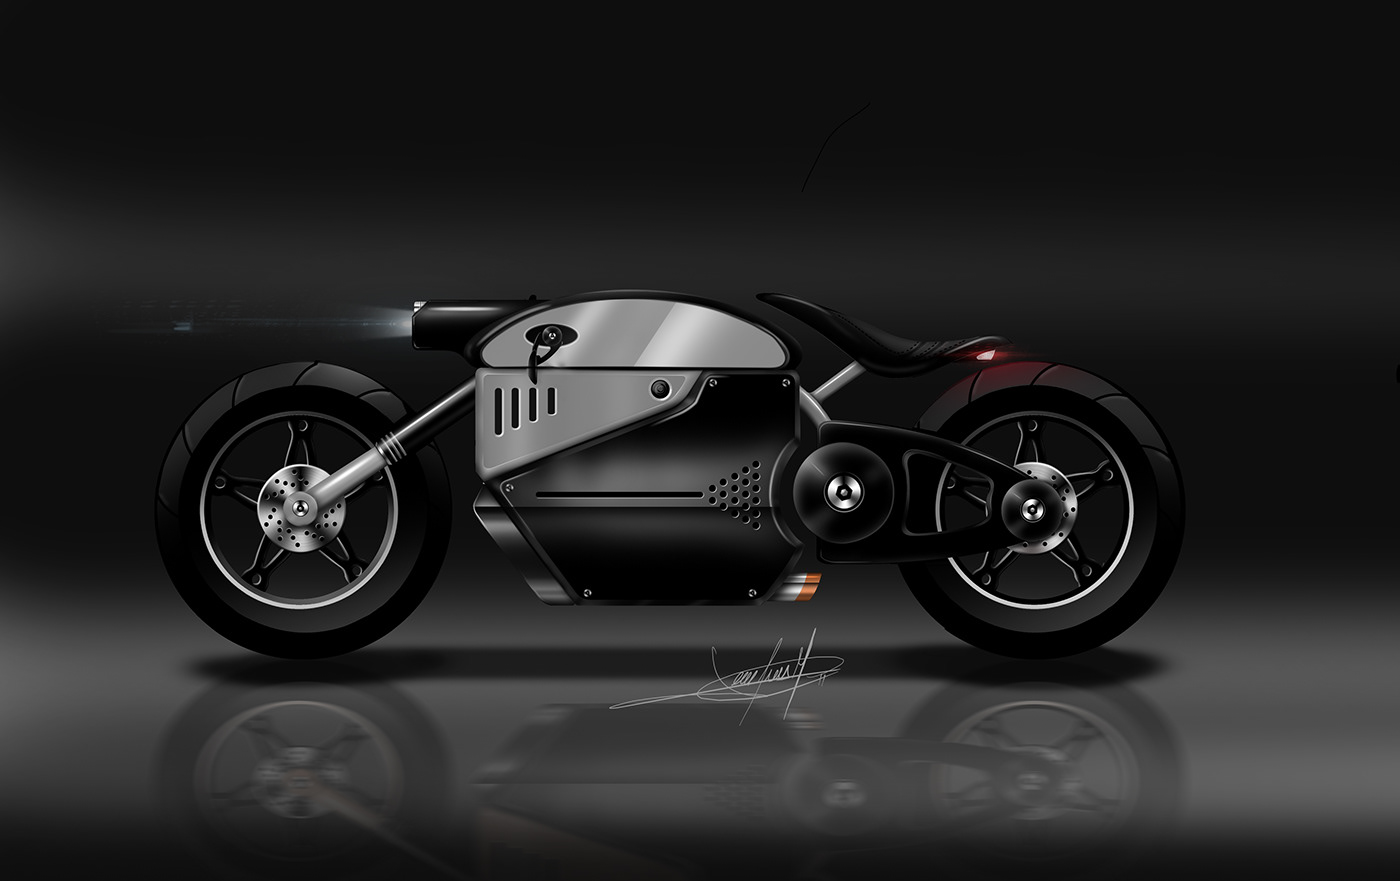 Conceptdesign bikedesign BMW digitalart rendering industrialdesign motorcicle